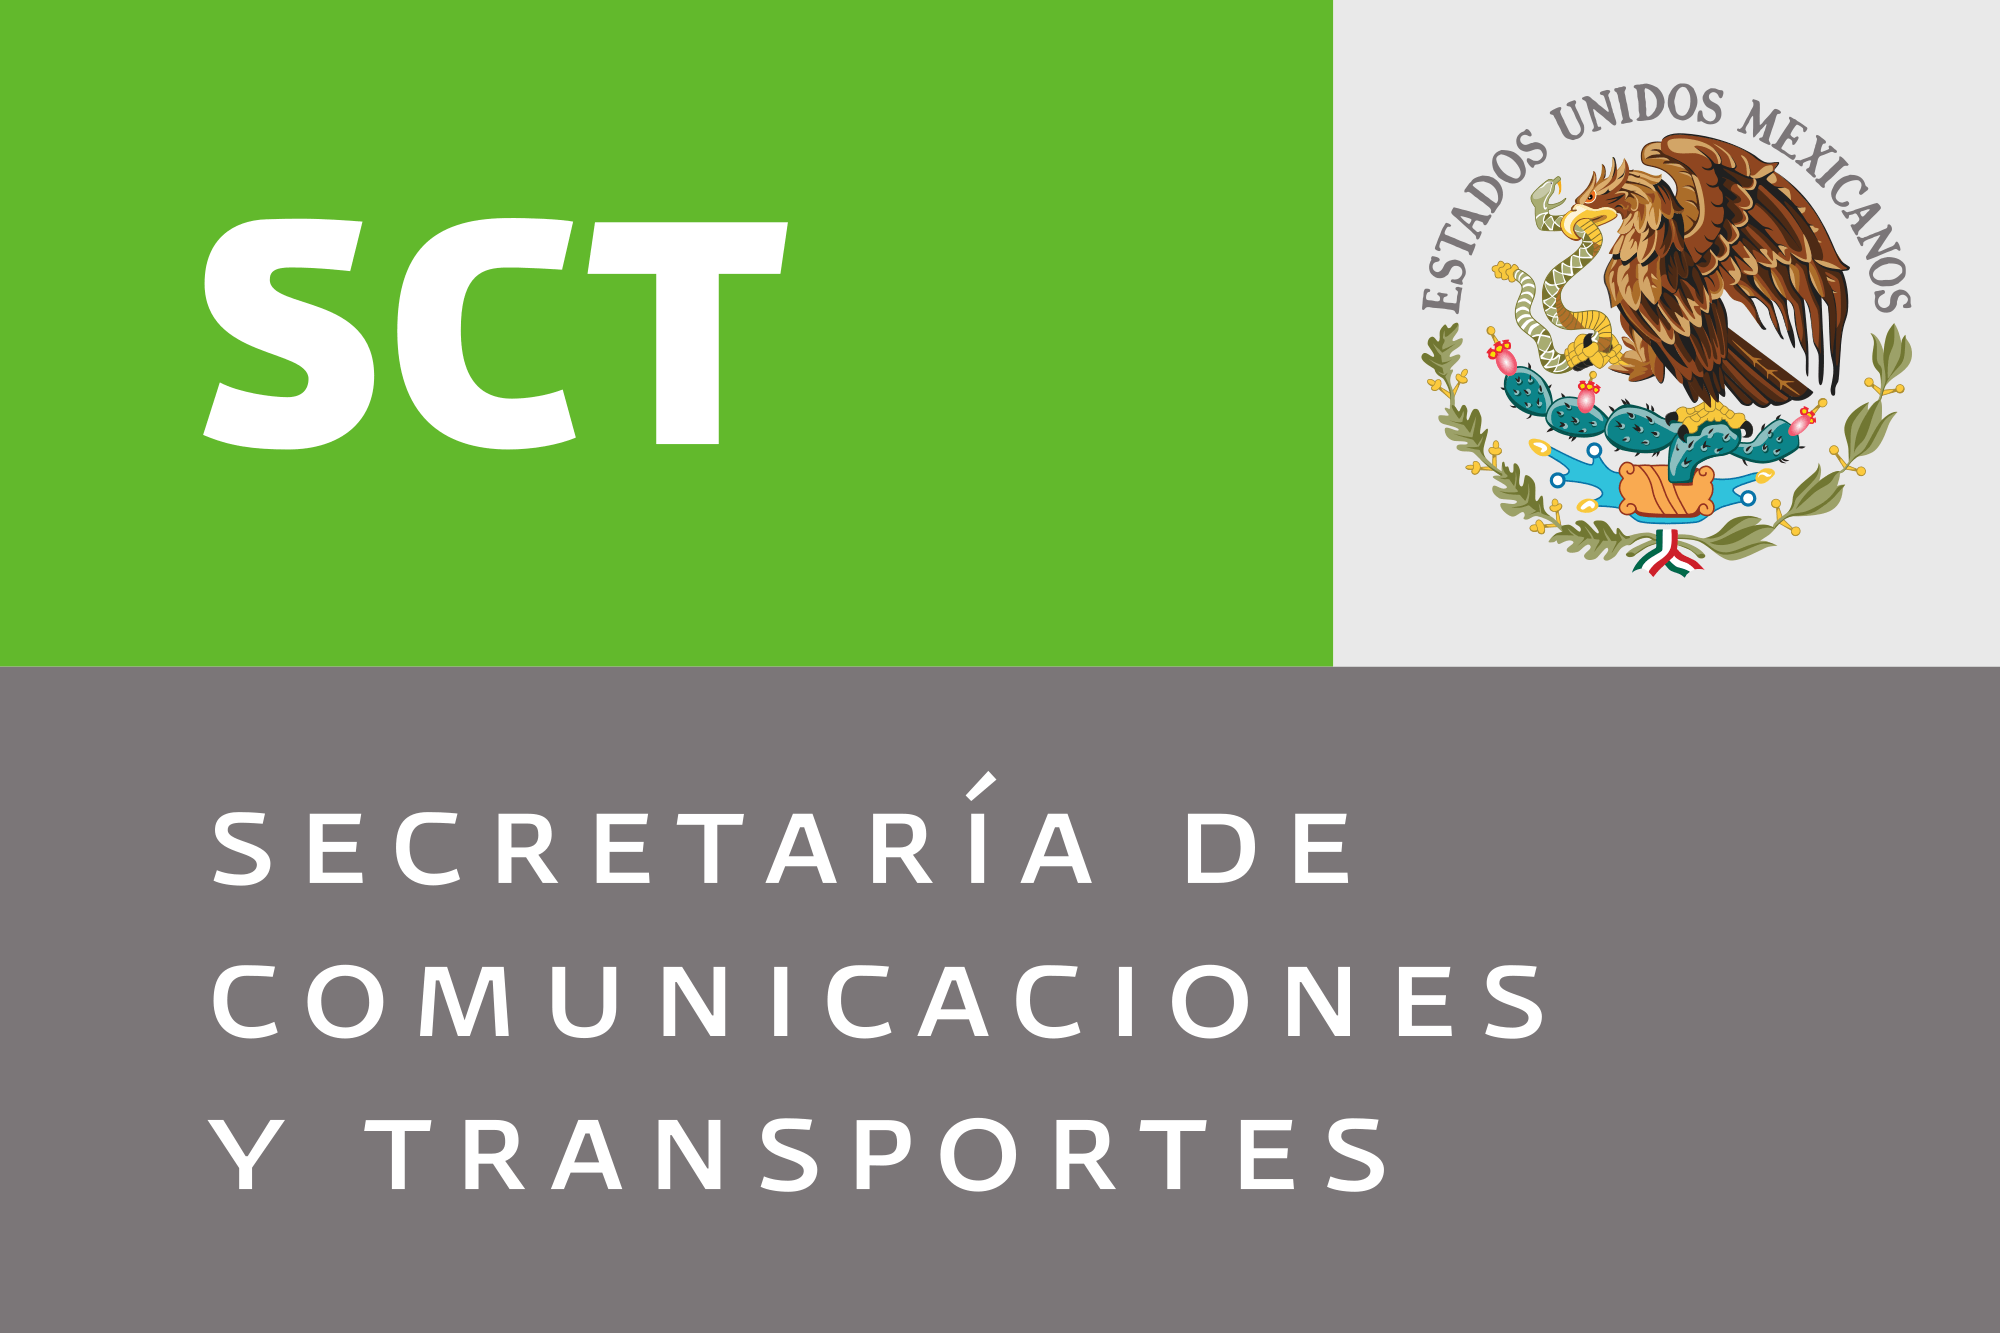 SCT Logo - File:SCT logo.svg - Wikimedia Commons